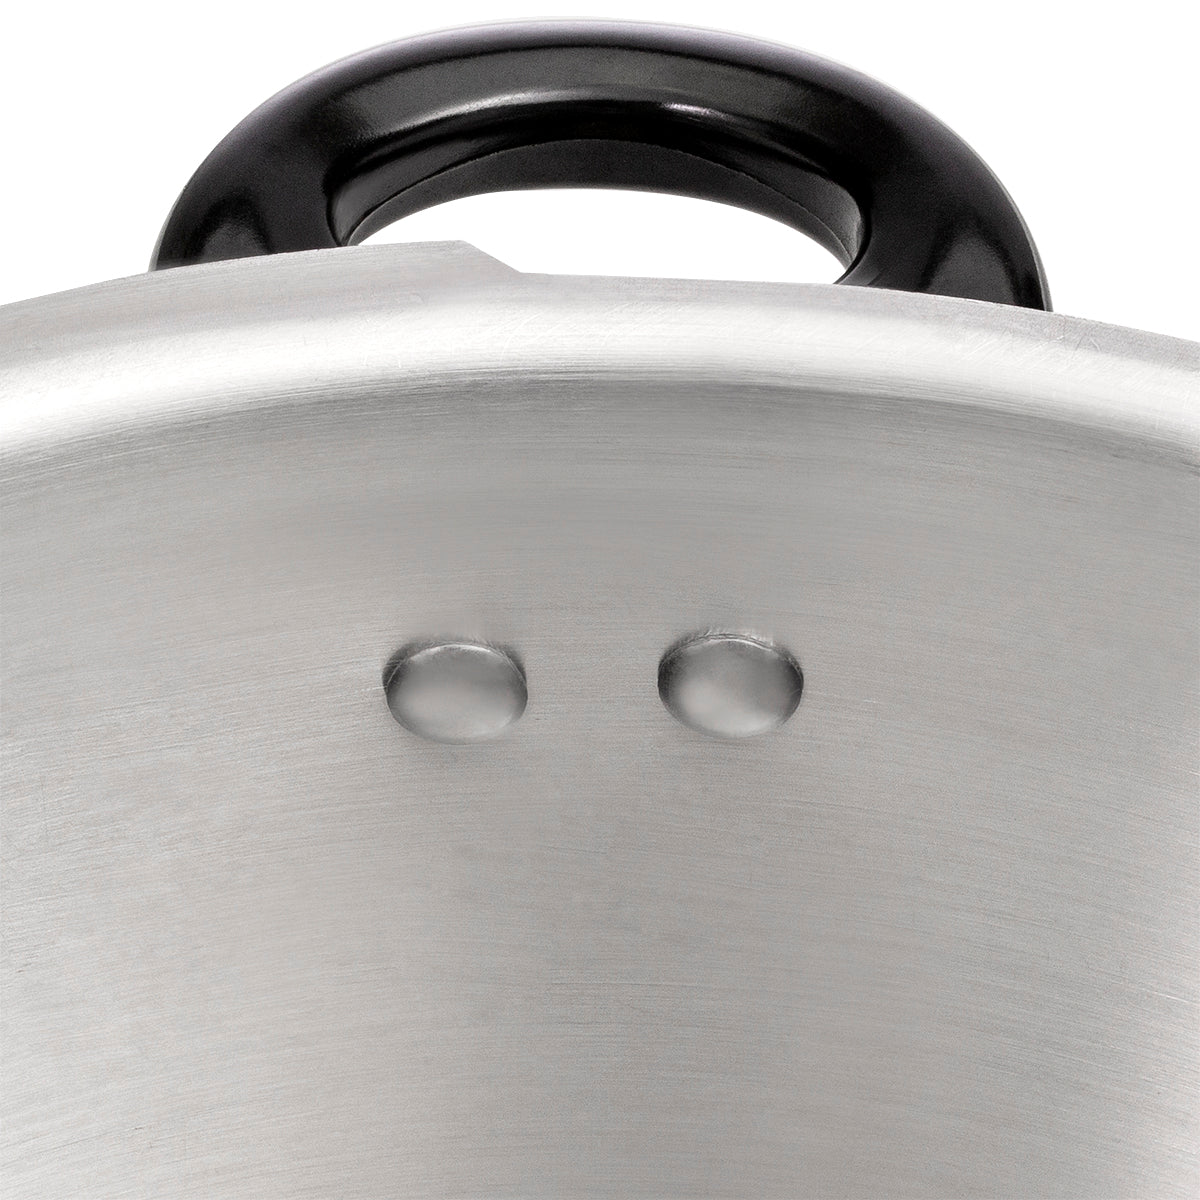 7.4 Quart Stainless Steel Pressure Cooker Stove Fast Cooker Stovetop Pot  Pressure Regulator 